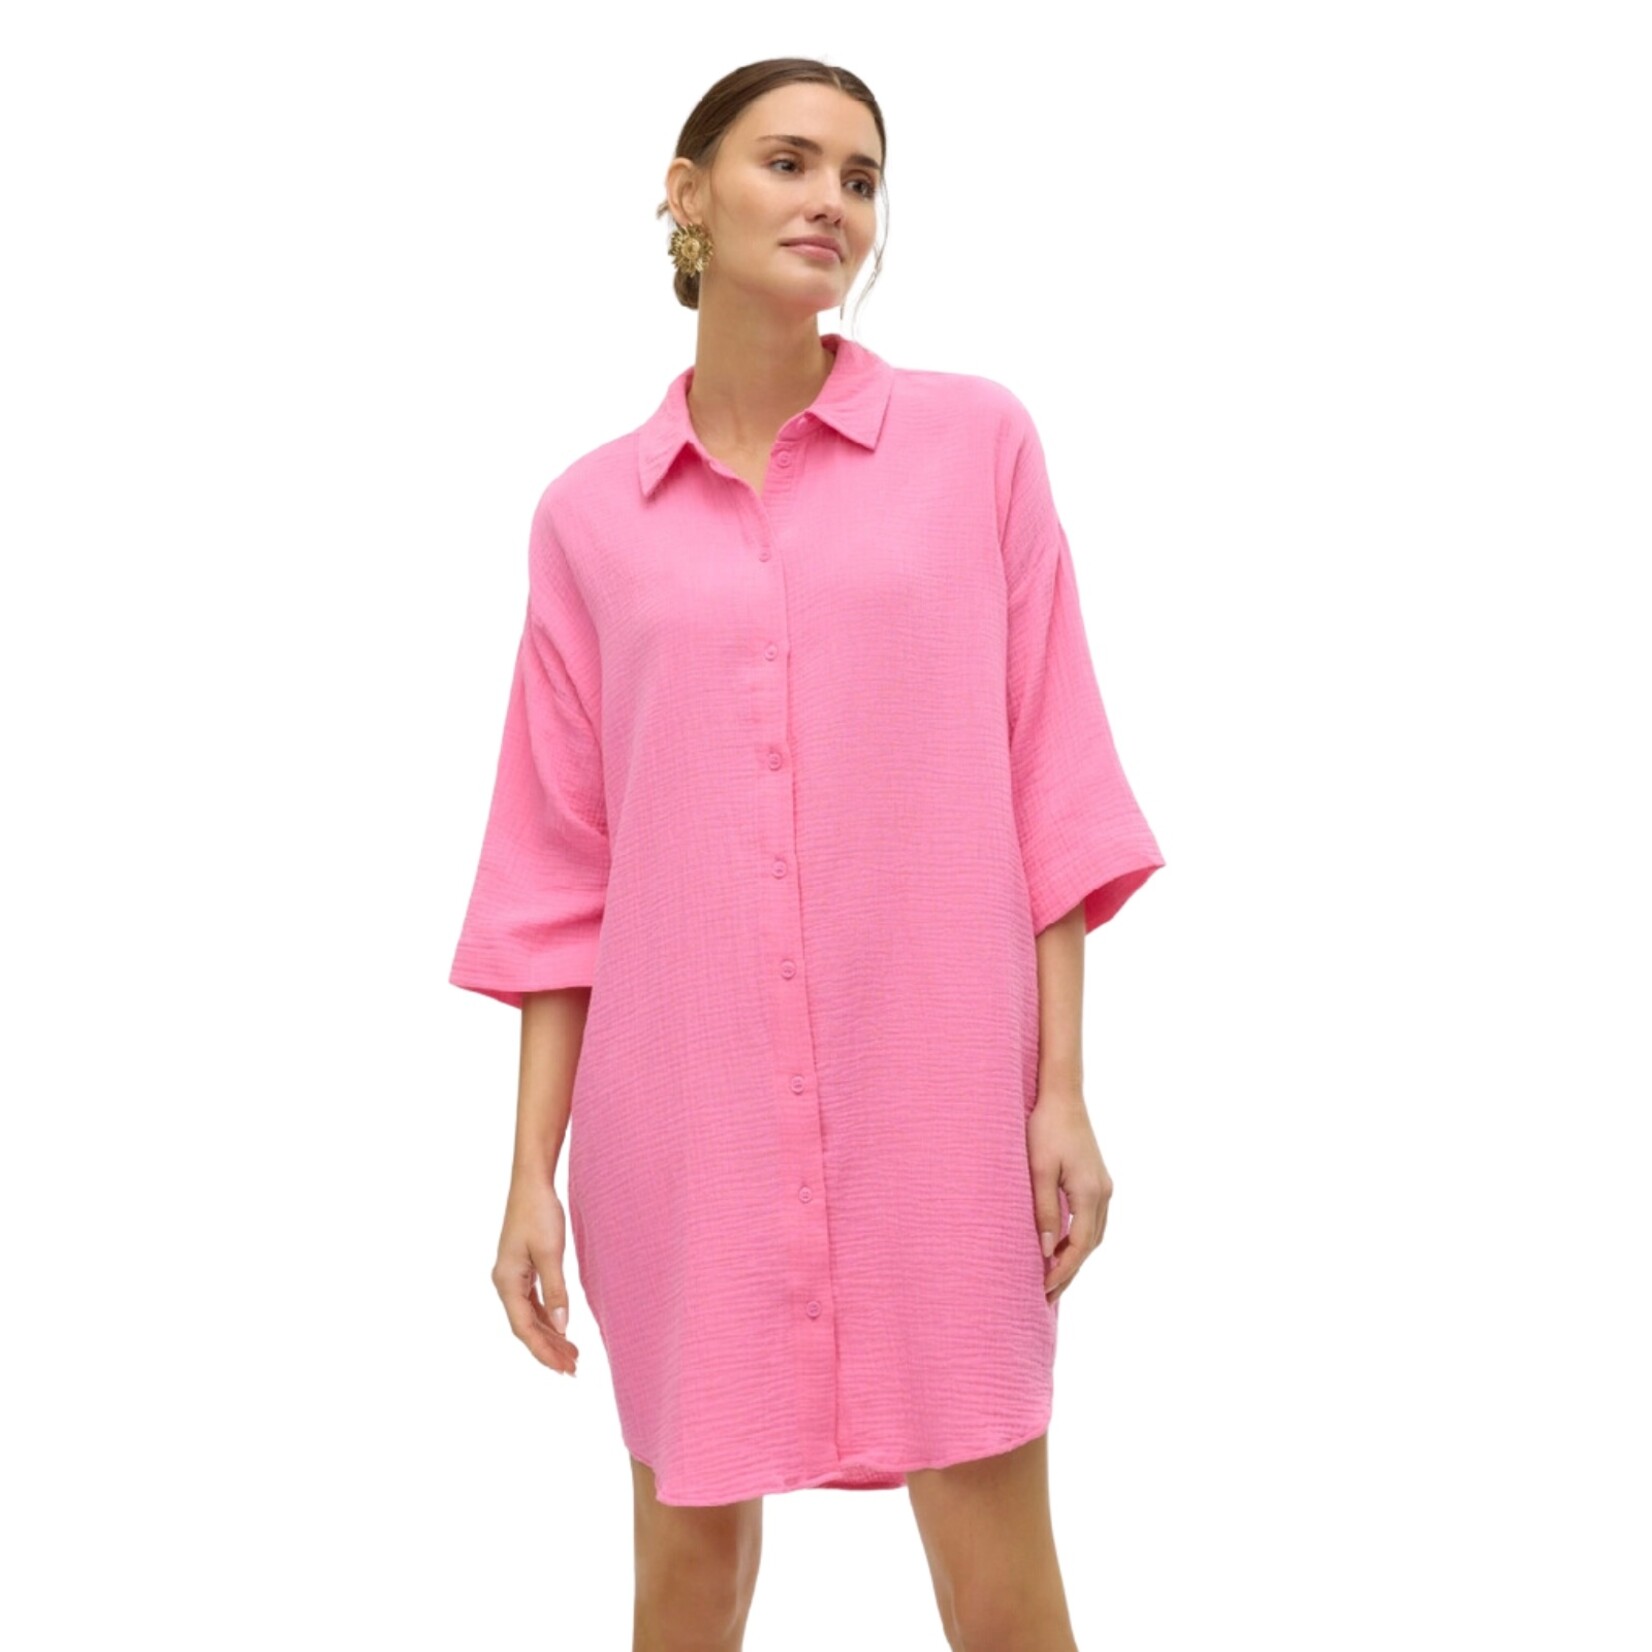 Vero Moda Madrid Gauze Shirt - Pink Cosmos